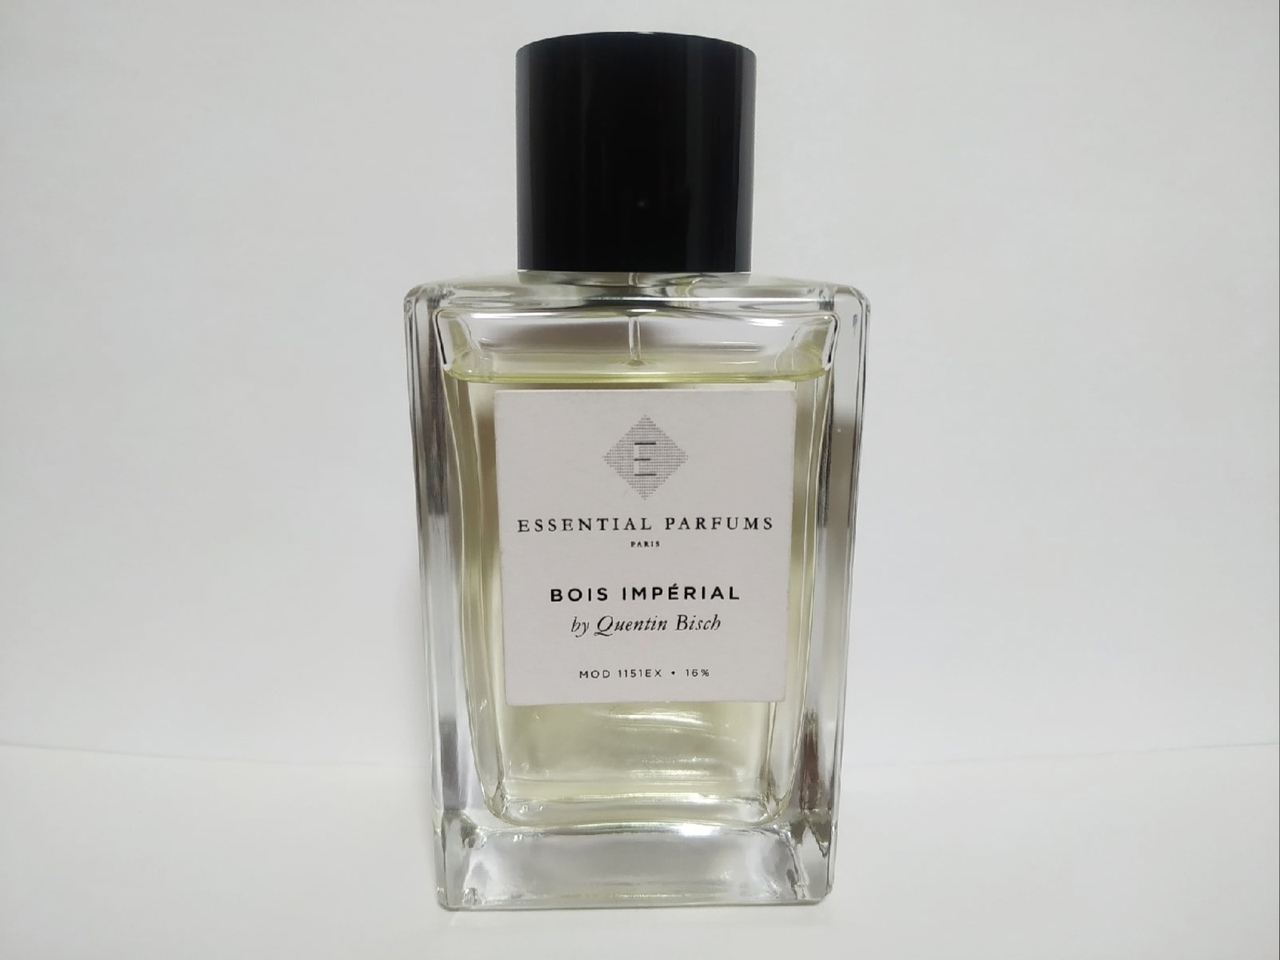 Bois imperial essential parfums limited edition. Бойс Империал Парфюм. Bois Imperial Essential. Ессентал боис Империал. Essential Parfums.